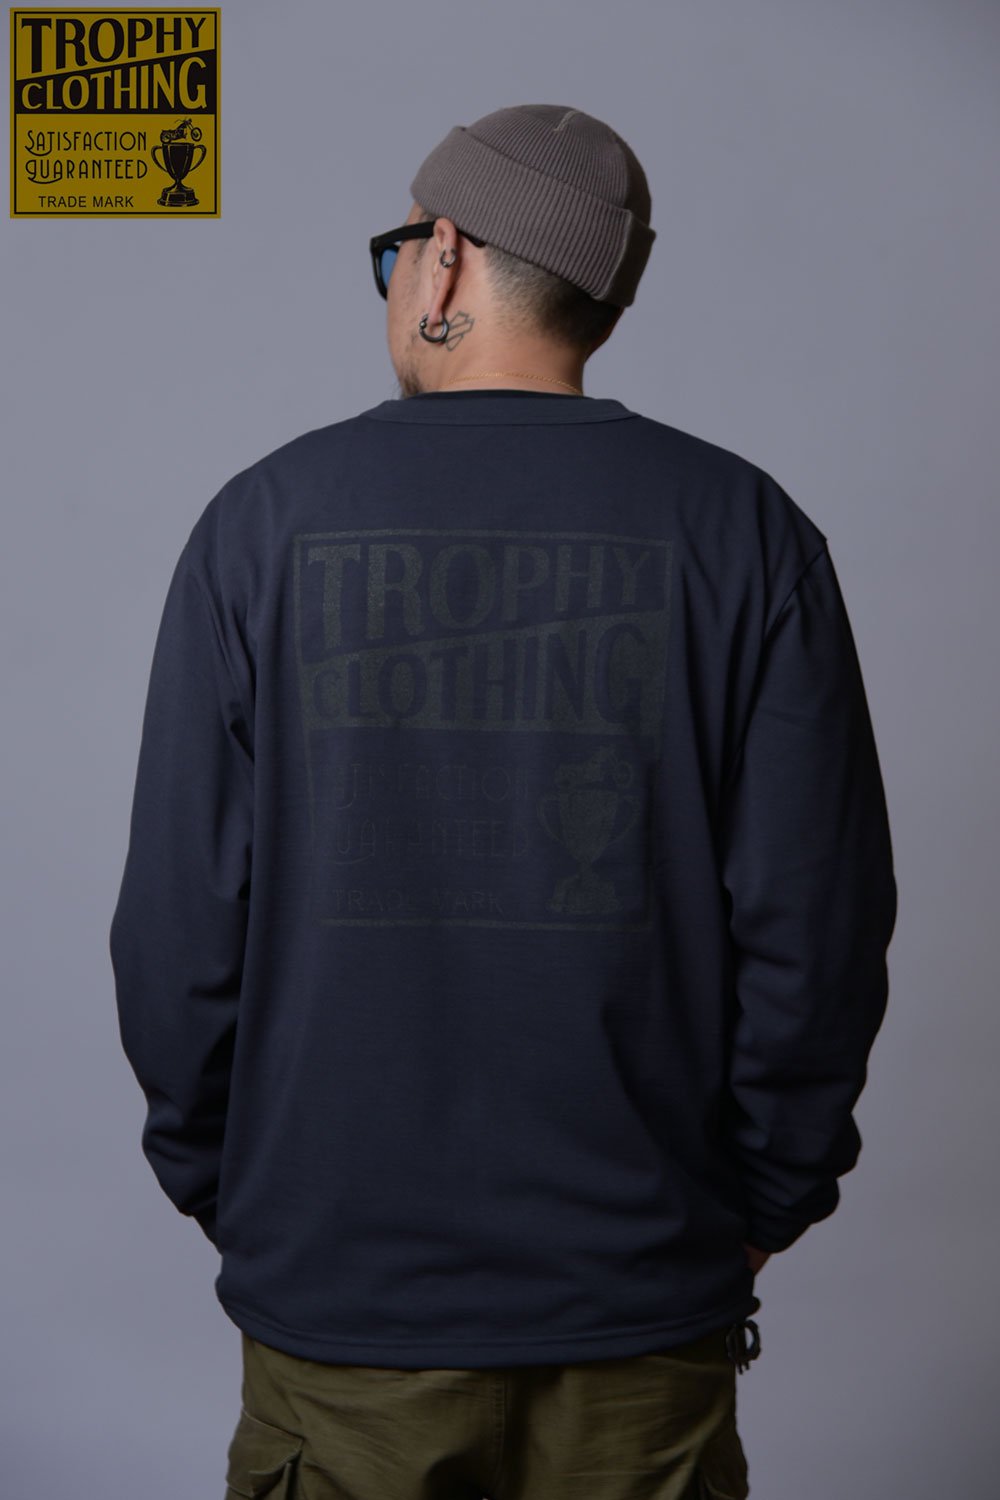 TROPHY CLOTHING(トロフィークロージング) ロングスリーブTシャツ